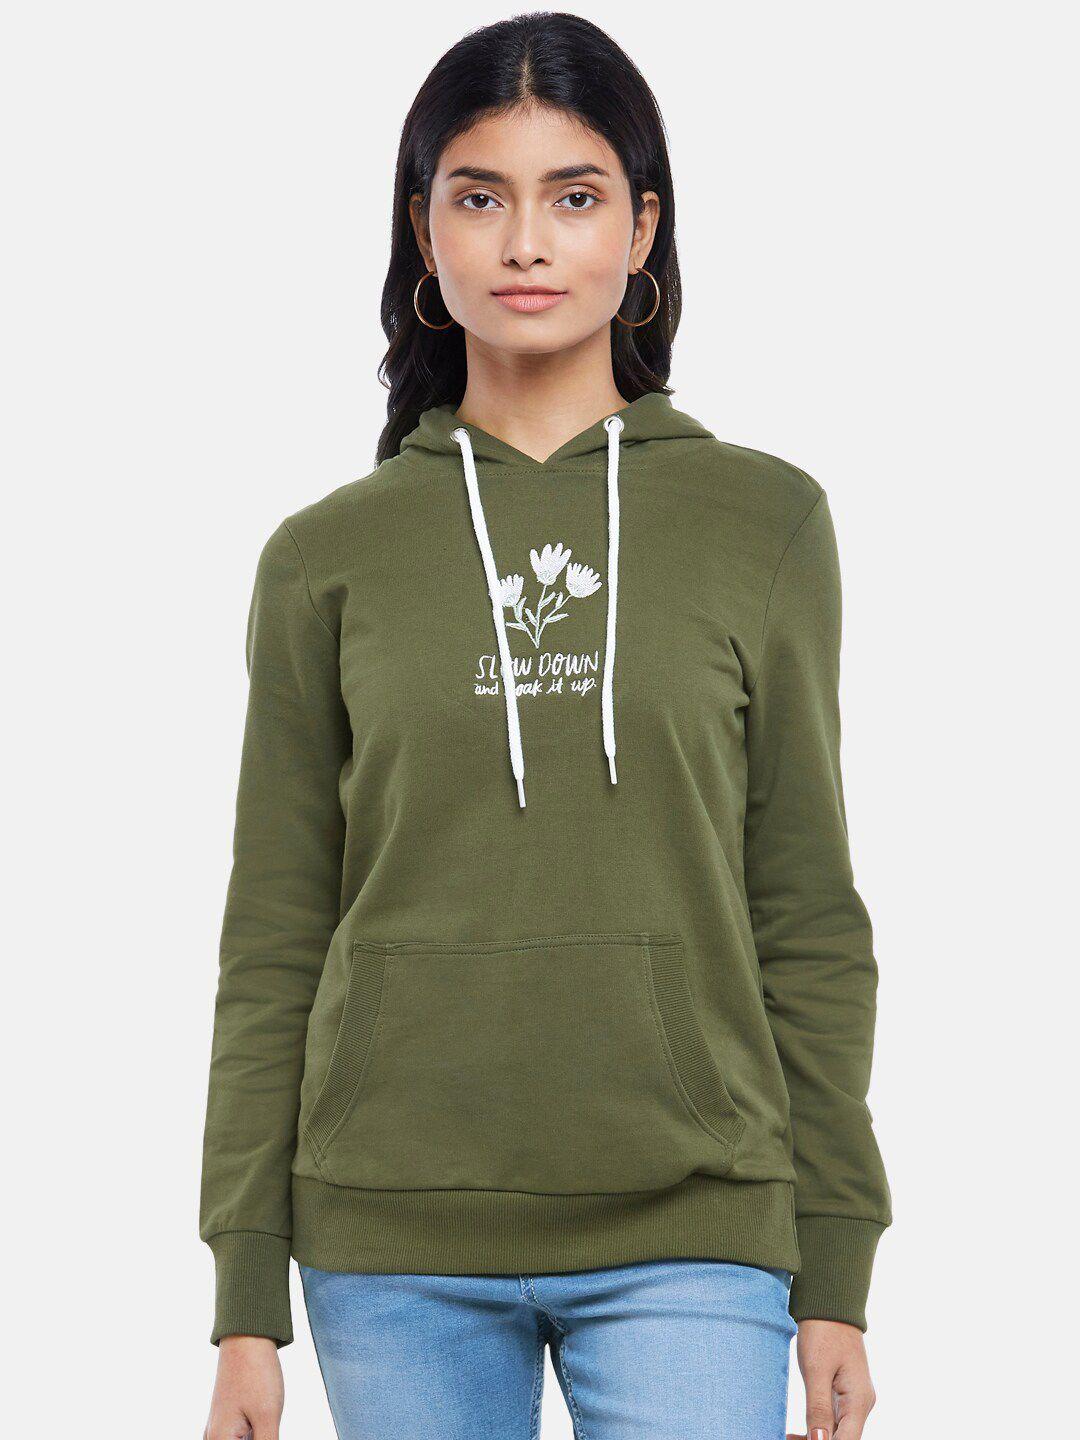 honey by pantaloons women olive green hooded sweatshirt